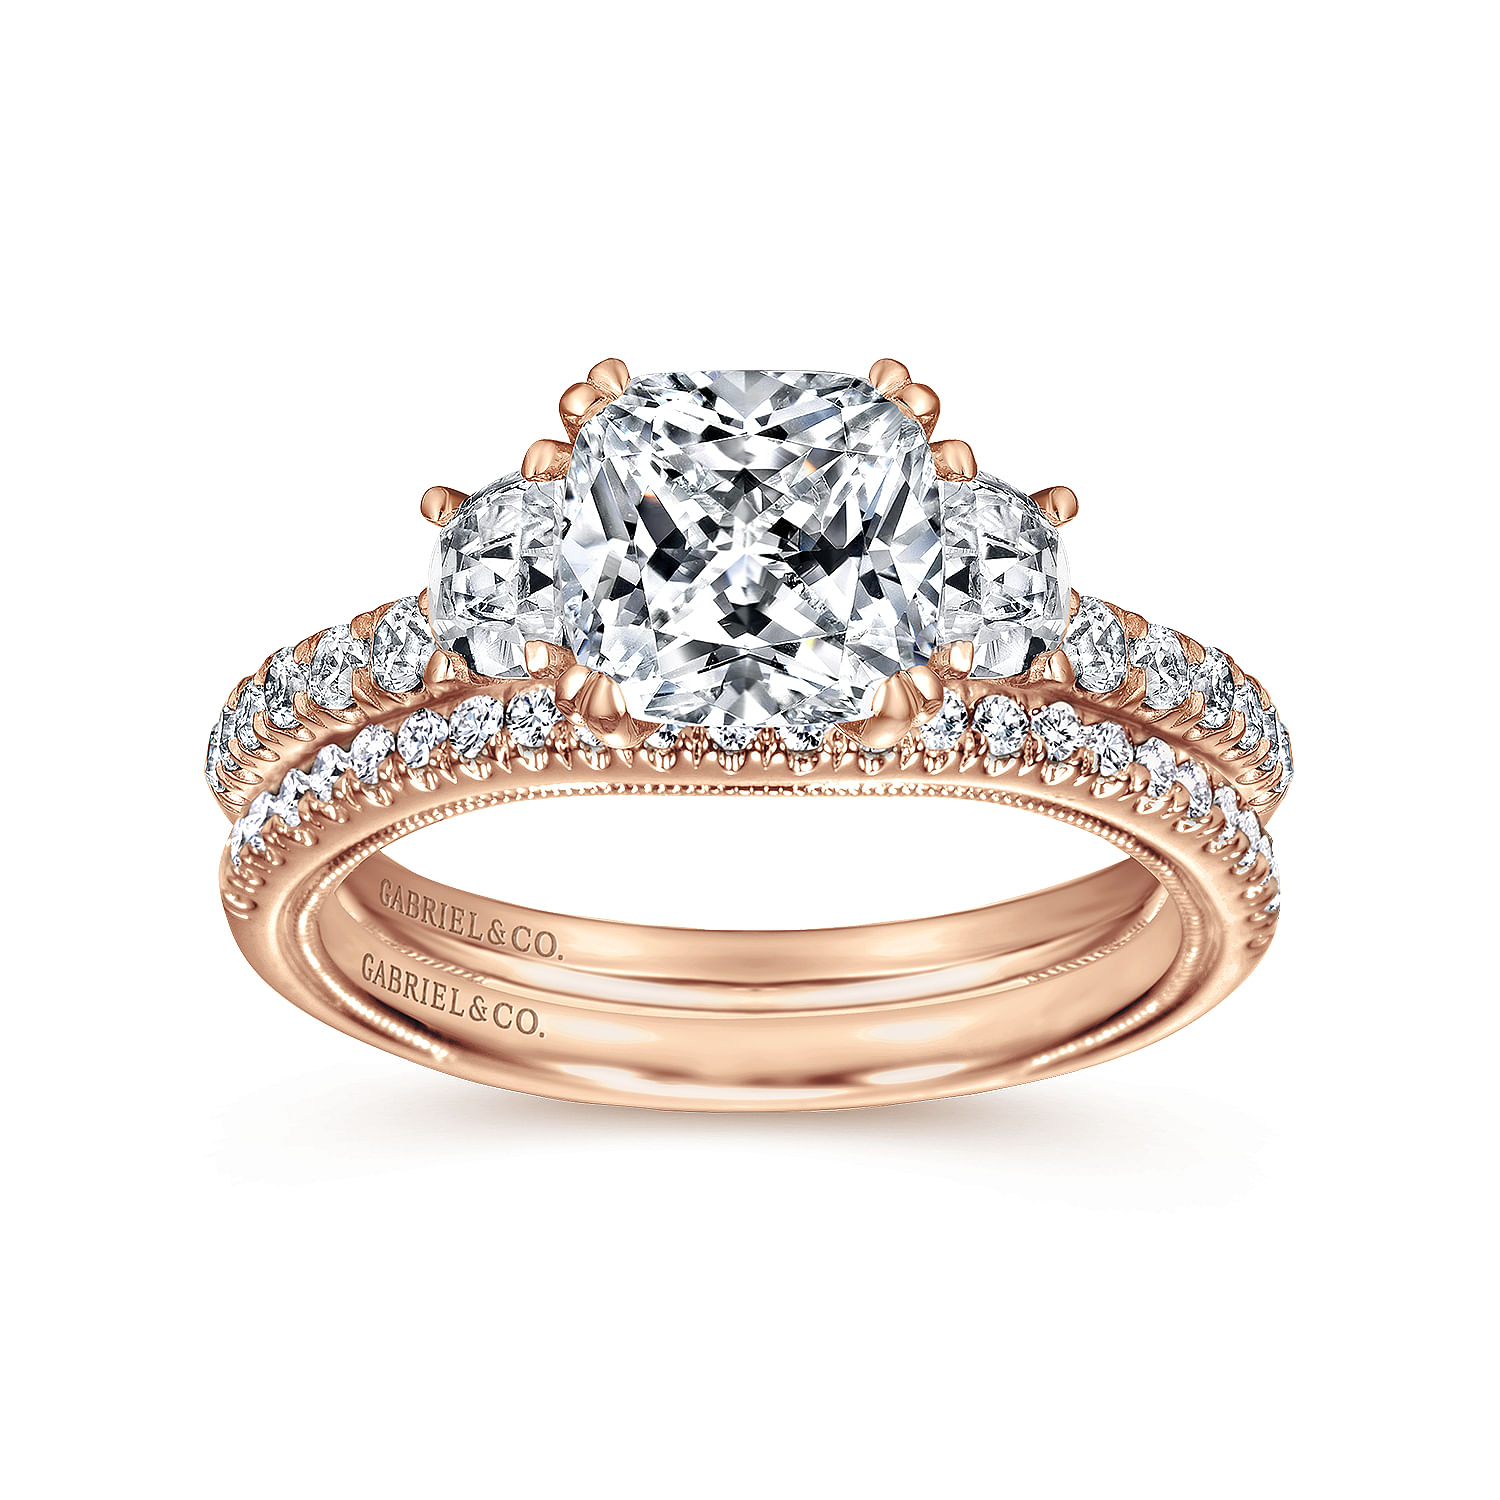 Vintage Inspired 14K Rose Gold Cushion Cut Three Stone Diamond Engagement Ring